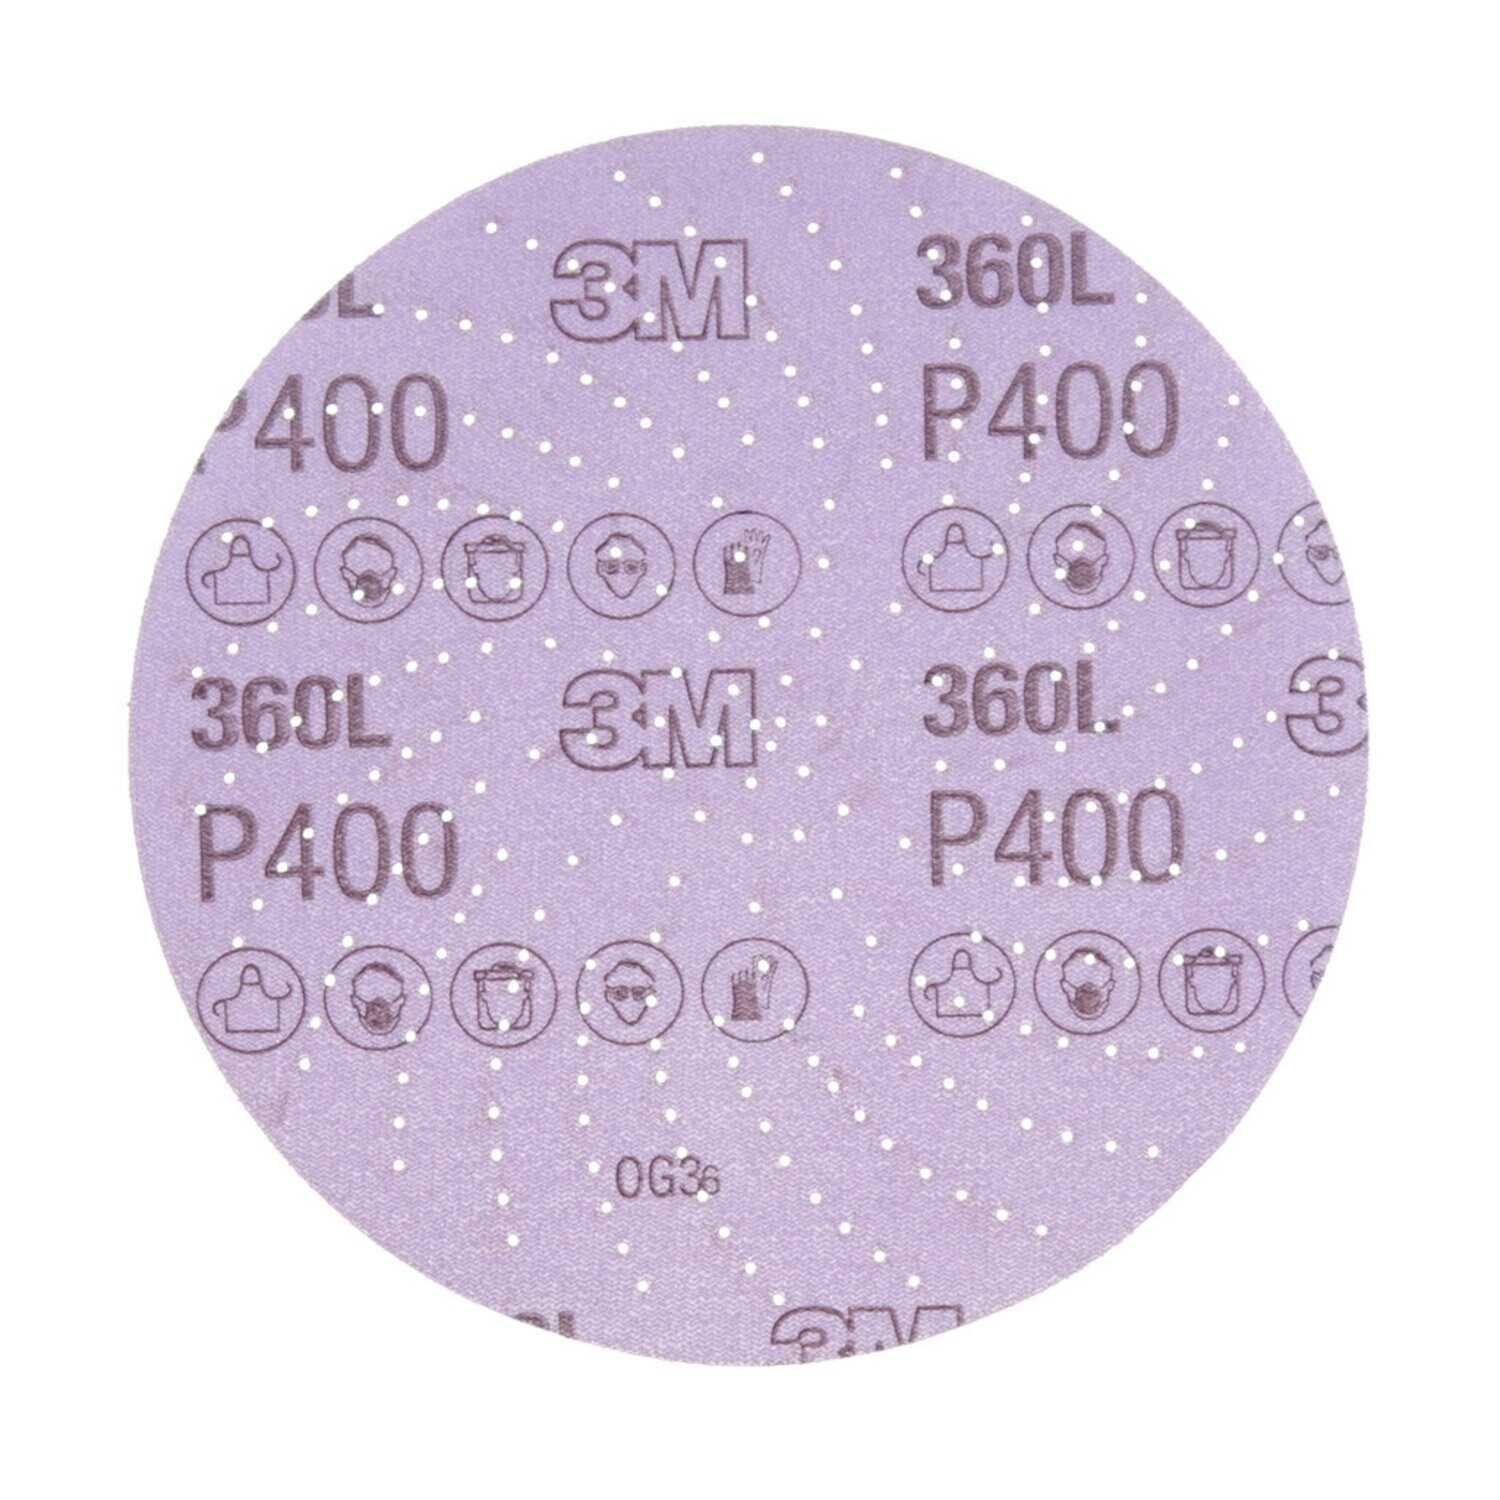 7100077623 - 3M Xtract Film Disc 360L, P400 3MIL, 6 in, Die 600LG, 100/Carton, 500
ea/Case